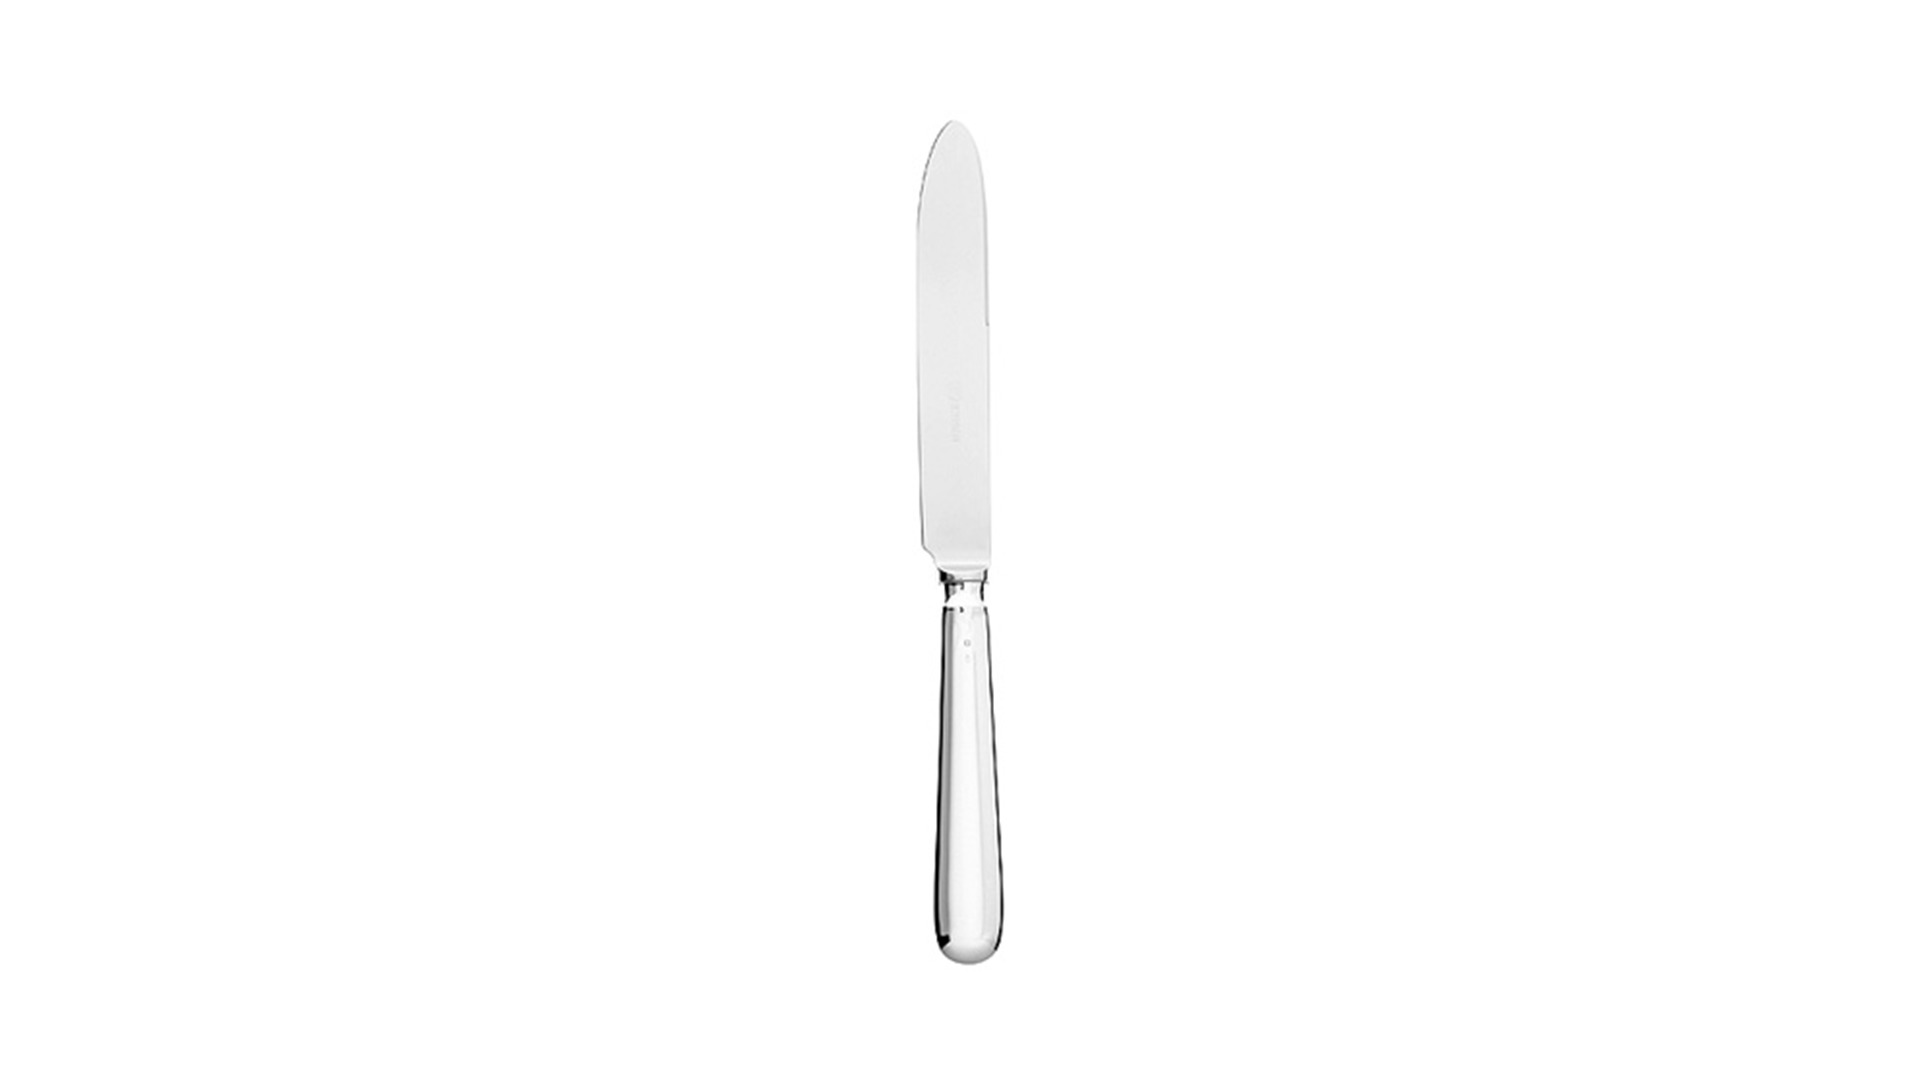 Нож десертный 22 см Schiavon Спаньоло, серебро 925пр